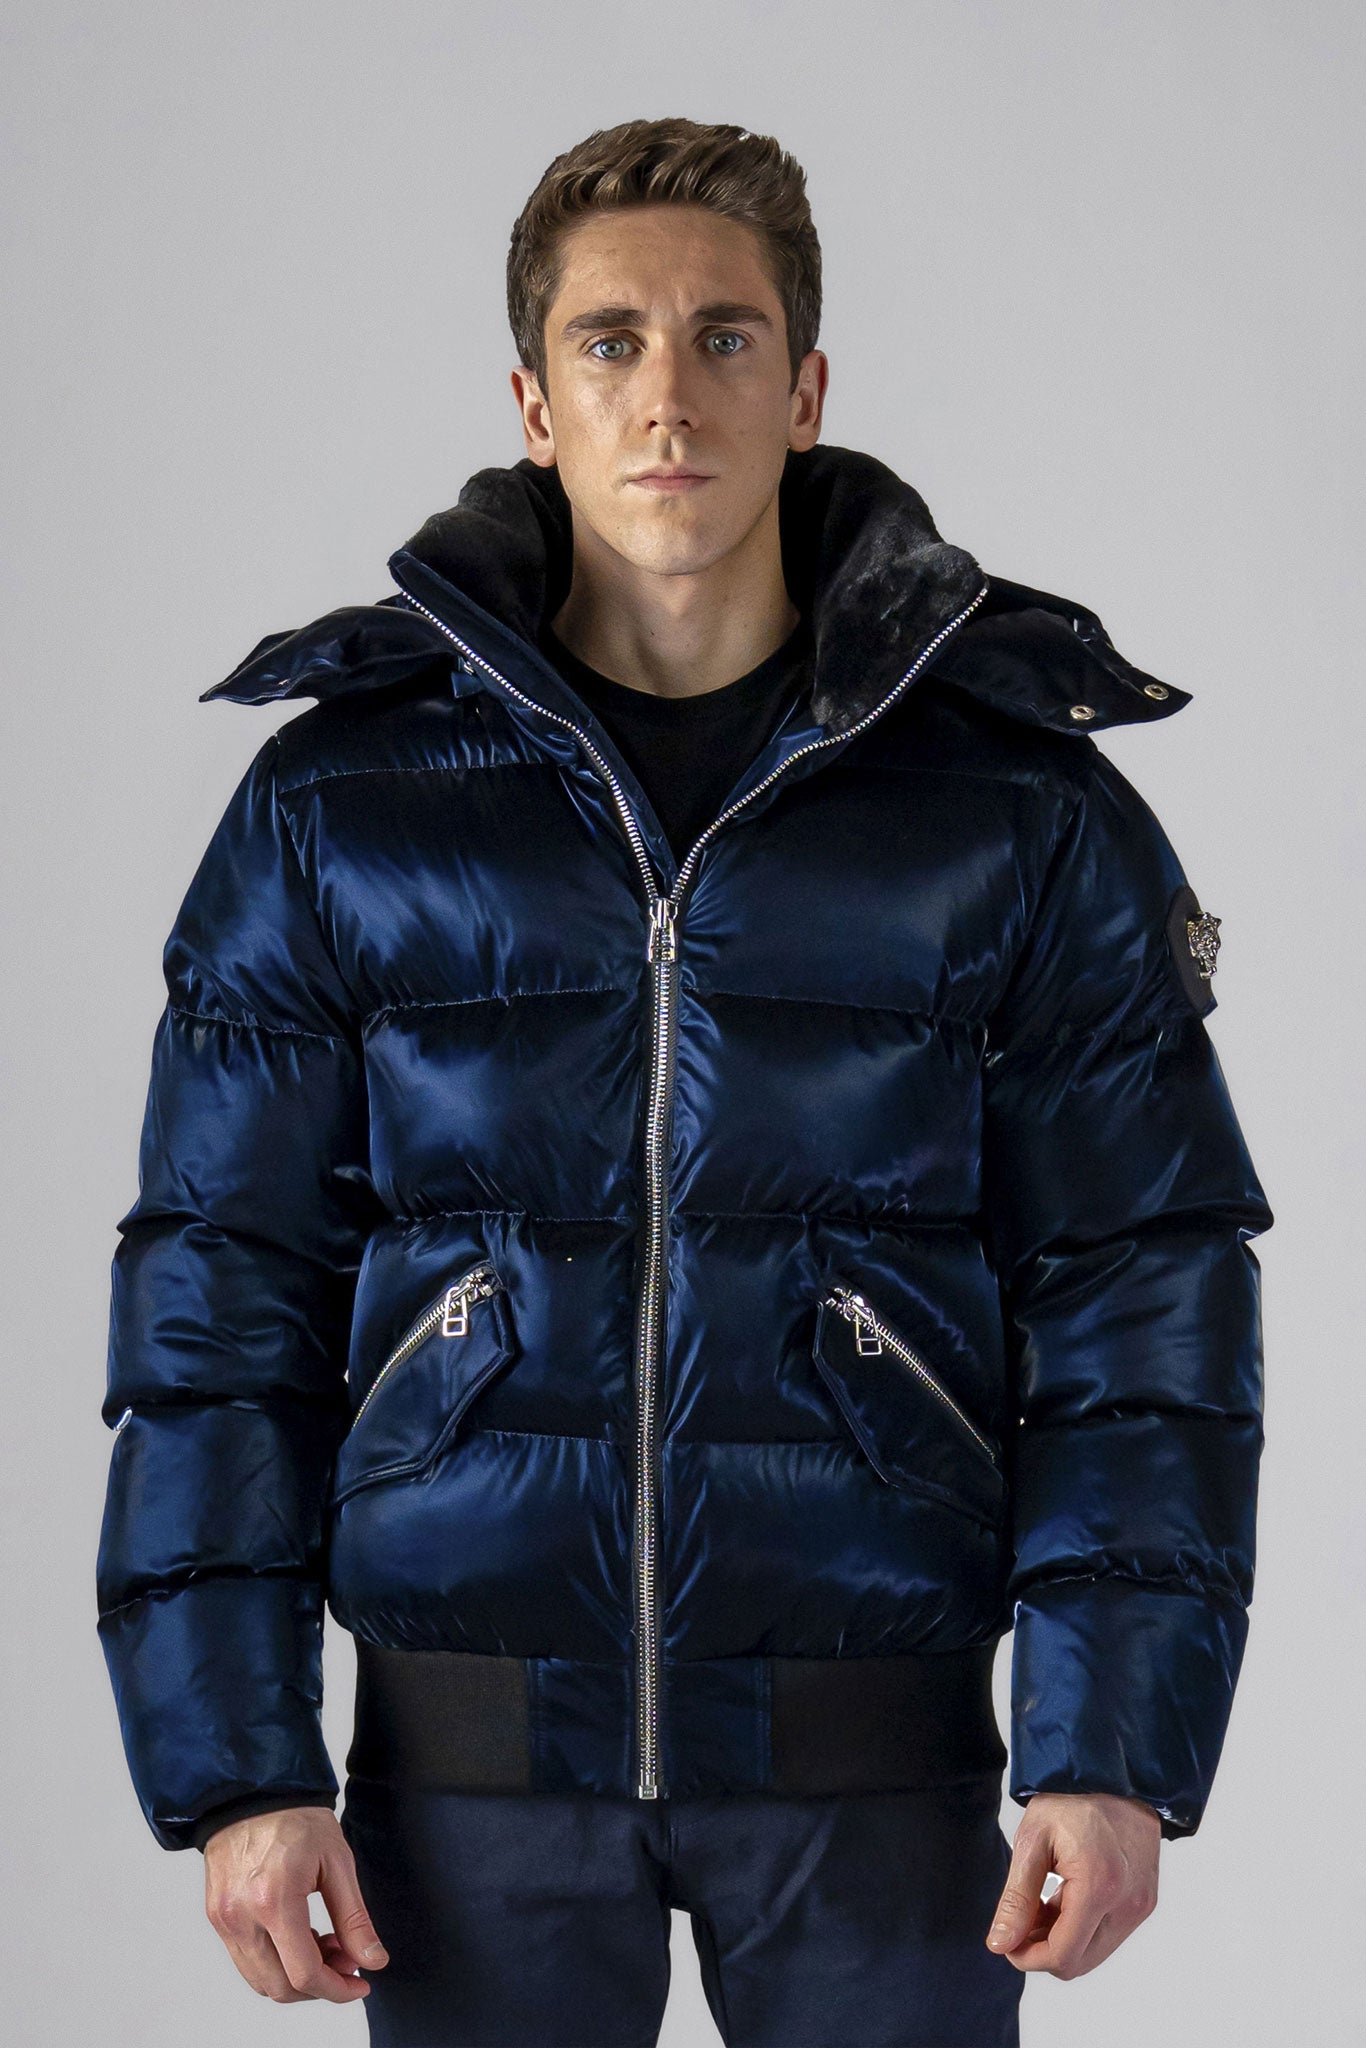 Woodpecker Men's Woody Bomber Winter coat. High-end Canadian designer winter coat for men in shiny “All Wet Navy